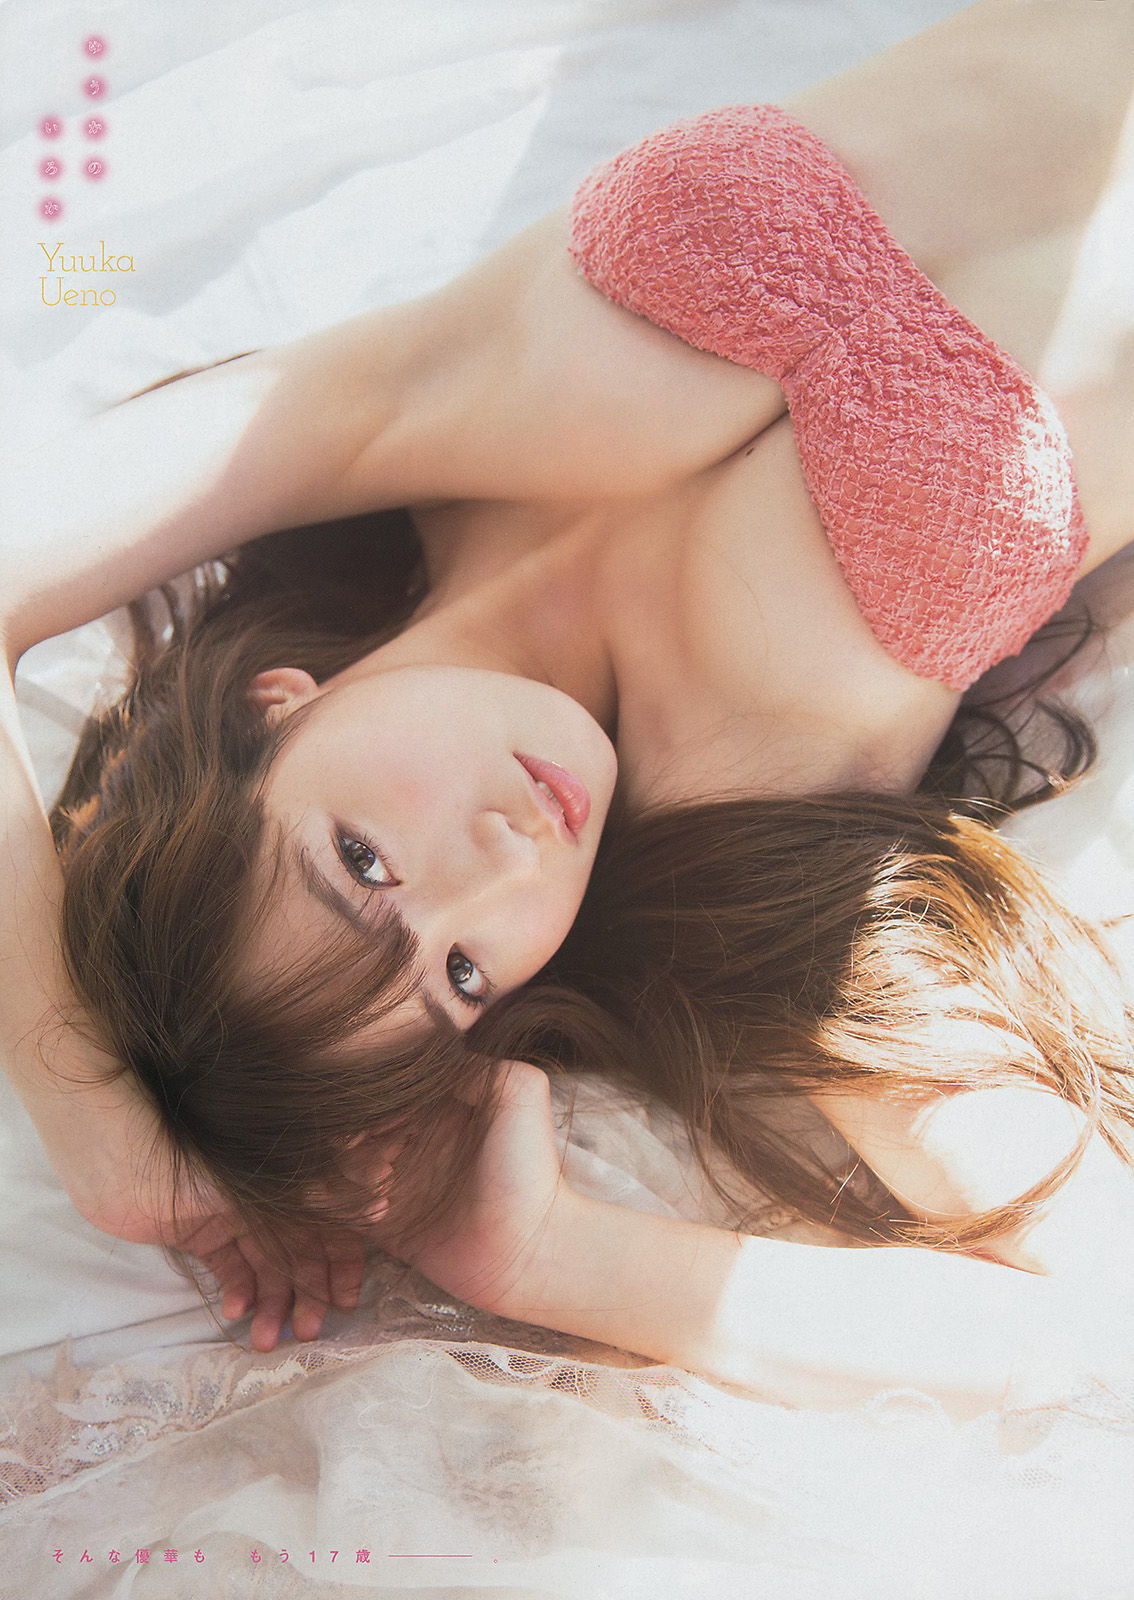 [Young Magazine] 2015年No.15 柳ゆり菜 上野優華